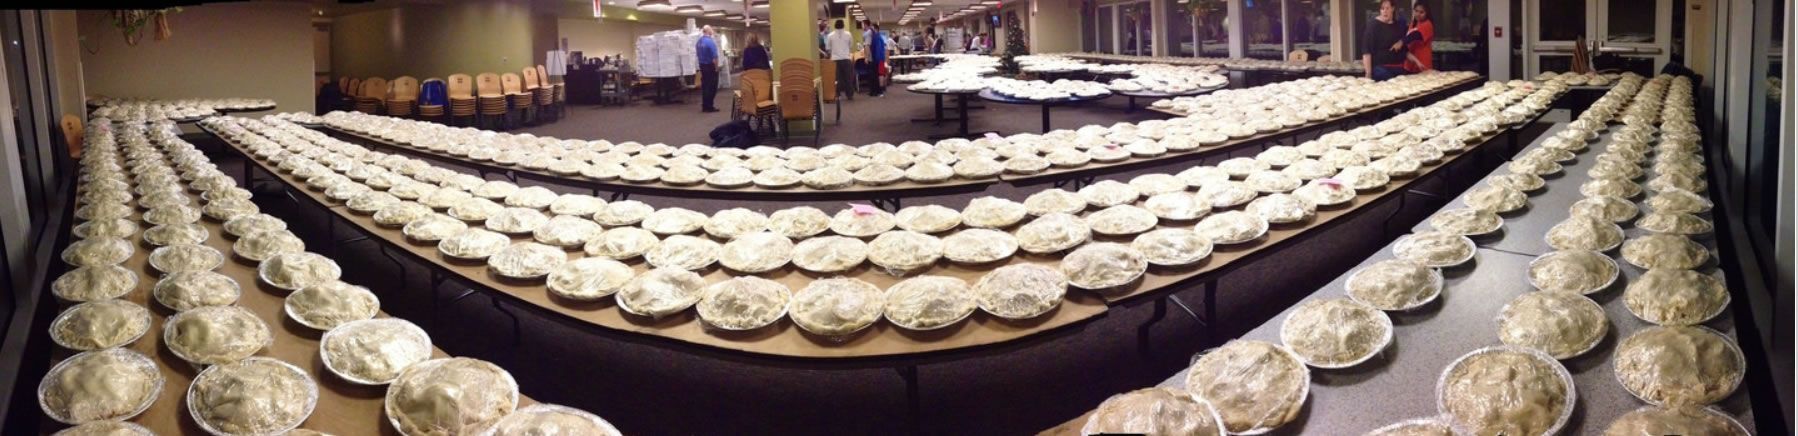 Longest line of pies: Saint Joseph's College breaks Guinness World Records' record (VIDEO) 